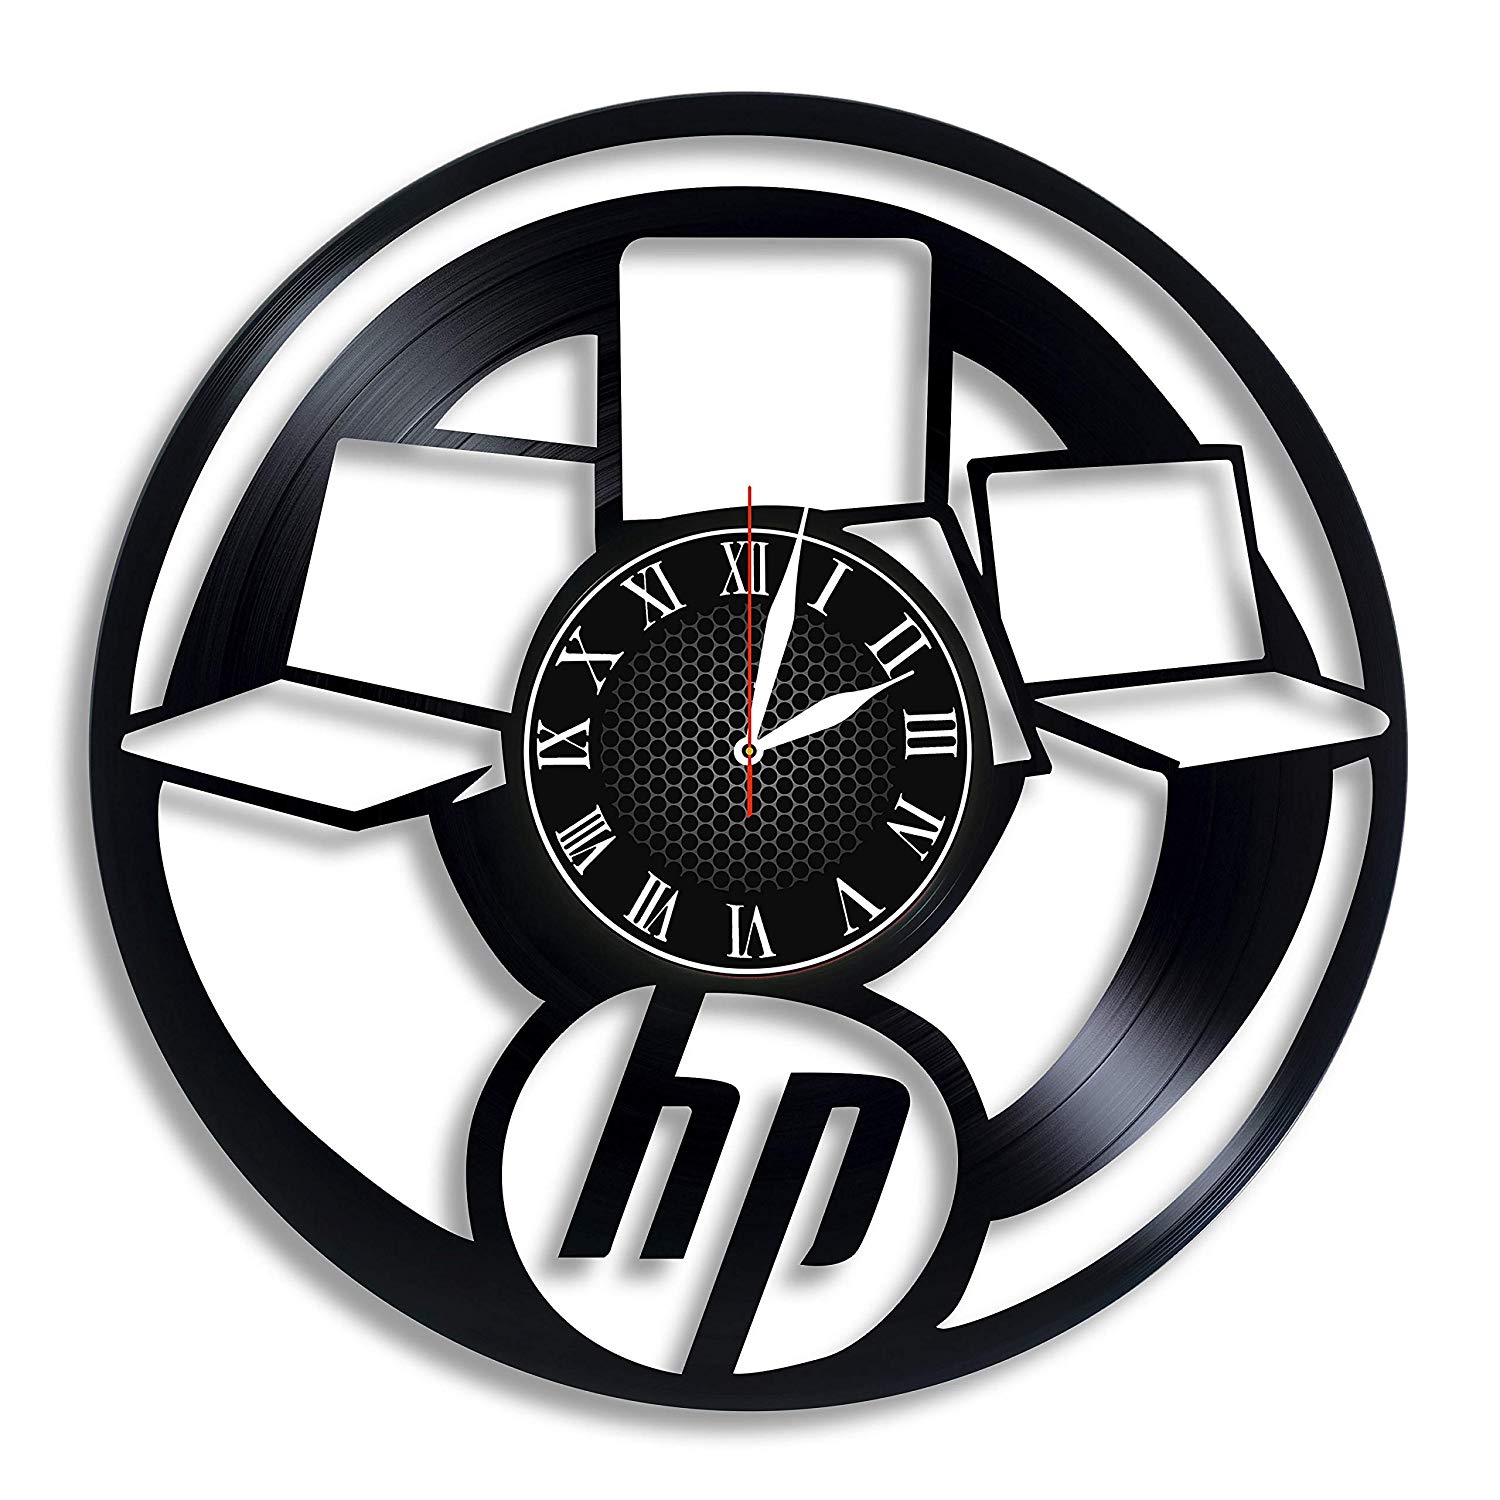 Packard Logo - Amazon.com: Hewlett-Packard company brand logo wall clock, Gifts For ...